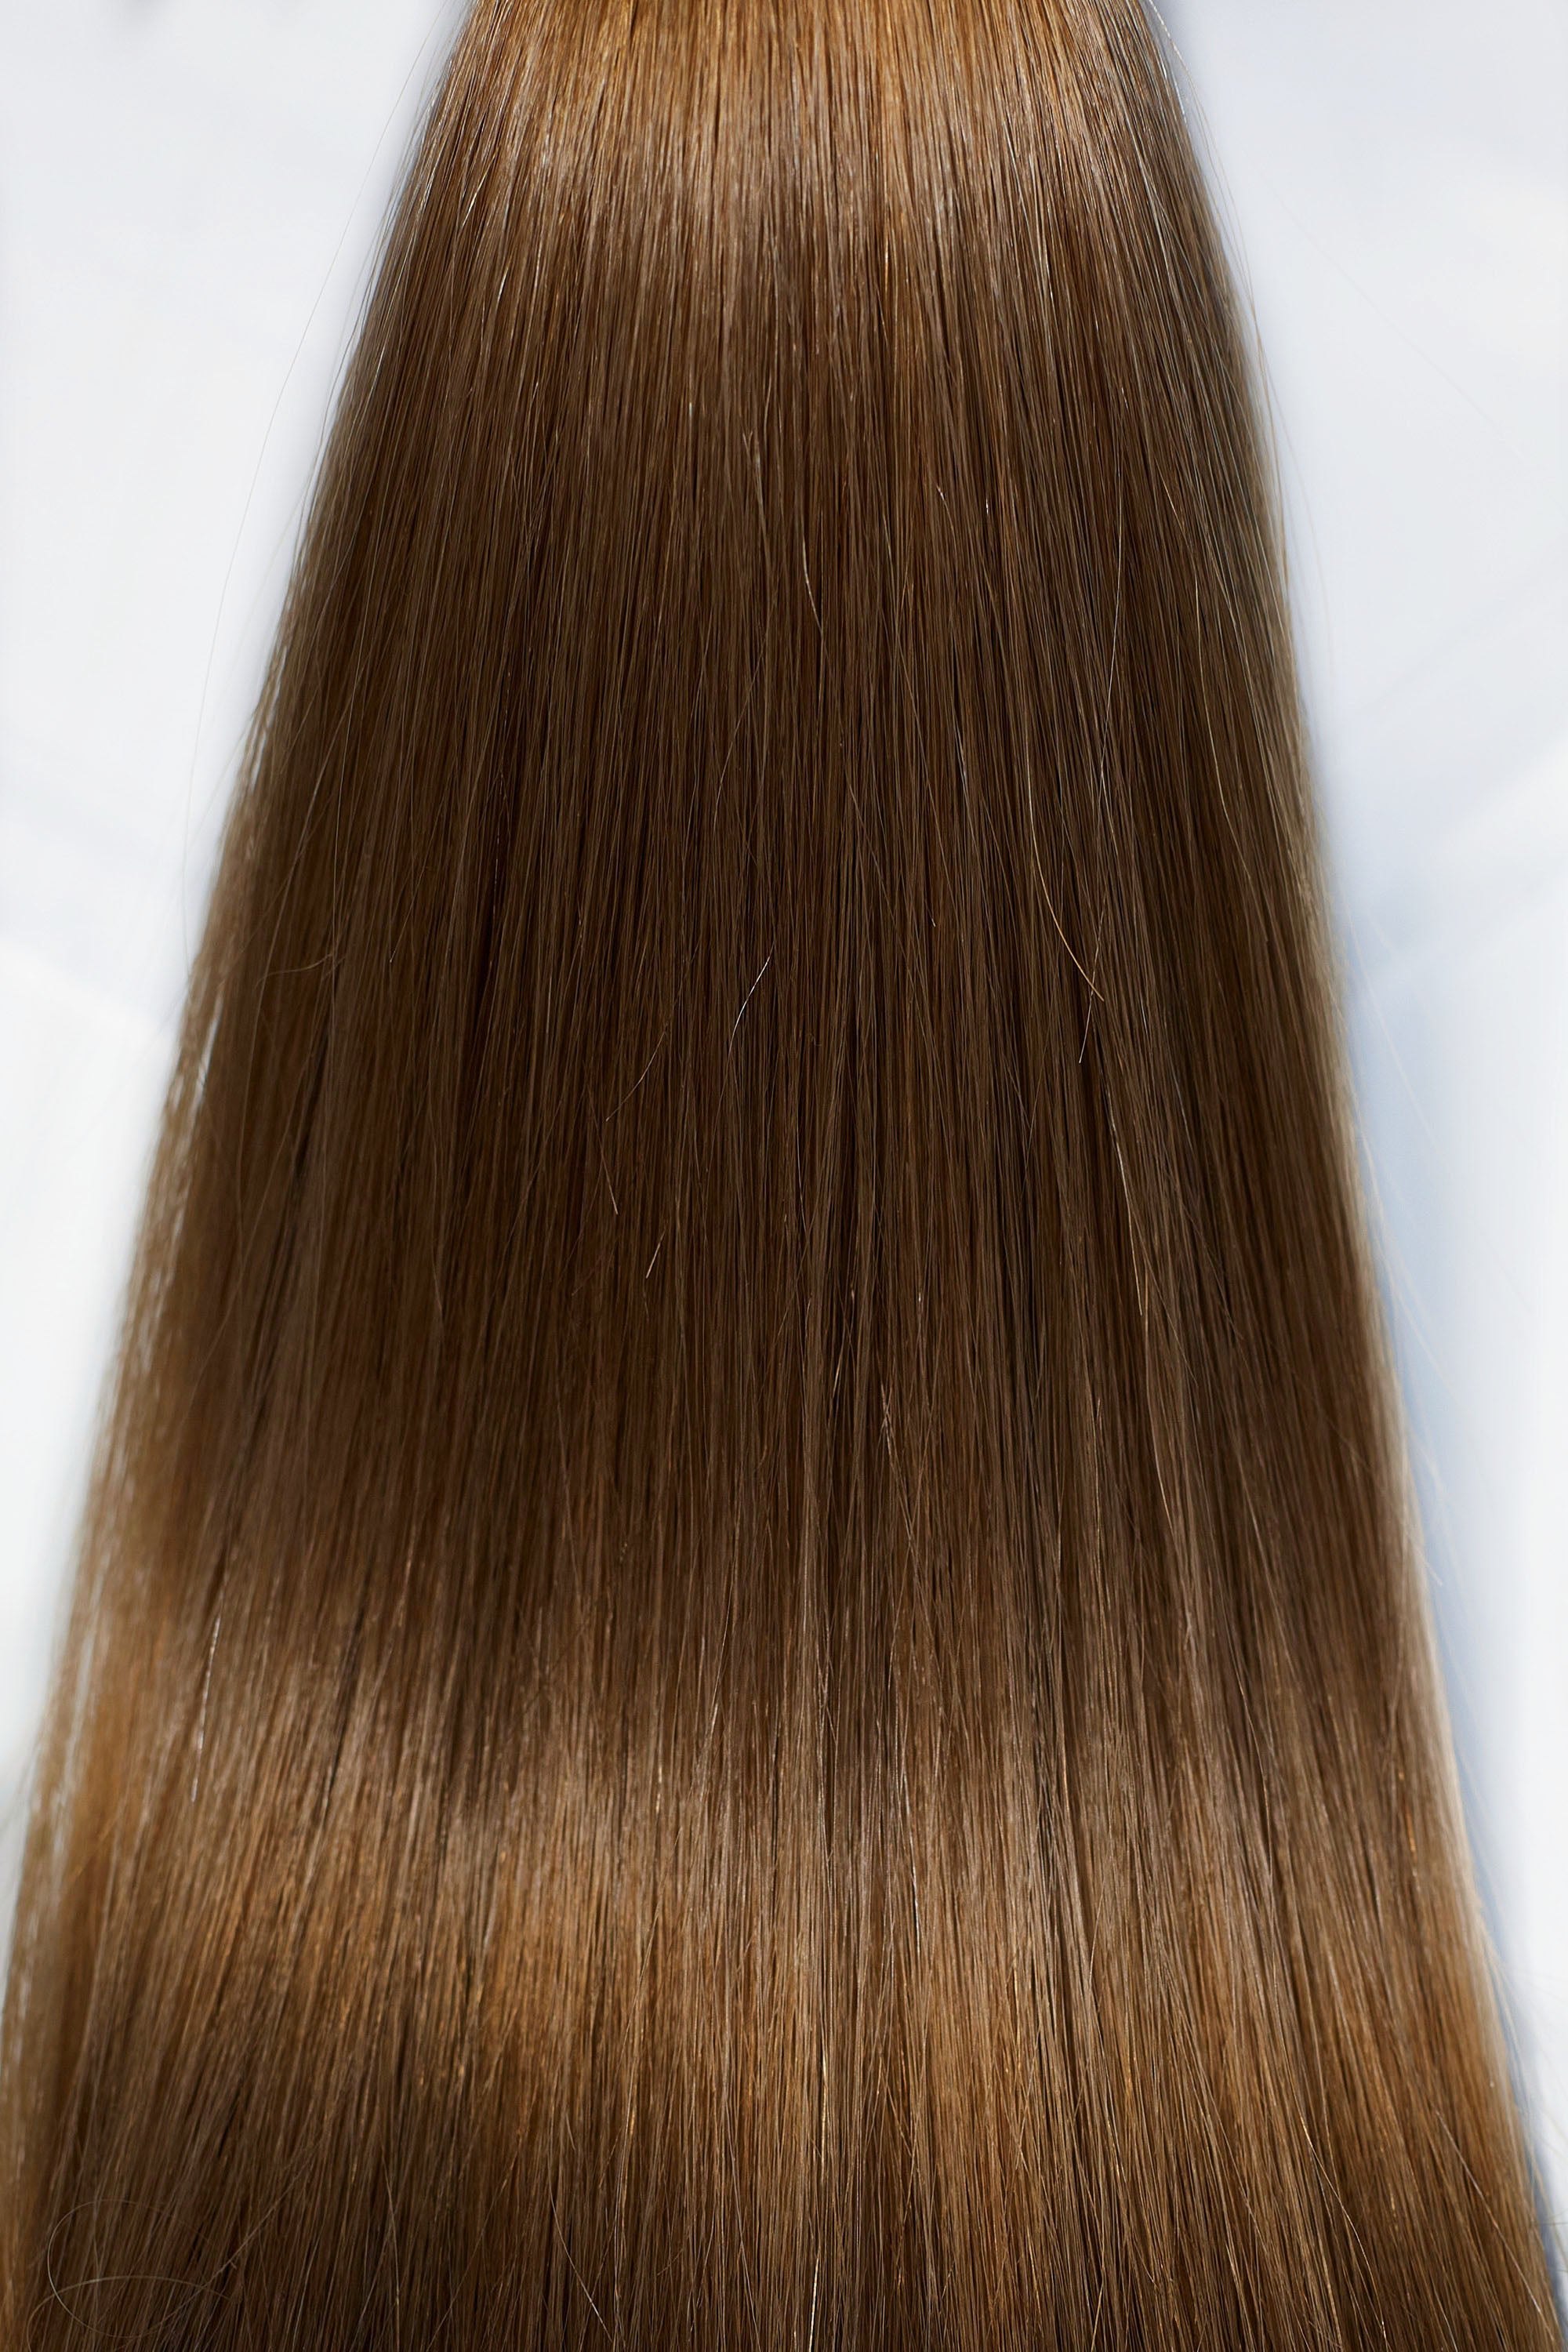 Behair professional Keratin Tip "Premium" 24" (60cm) Natural Straight Chestnut #6 - 25g (1g each pcs) hair extensions